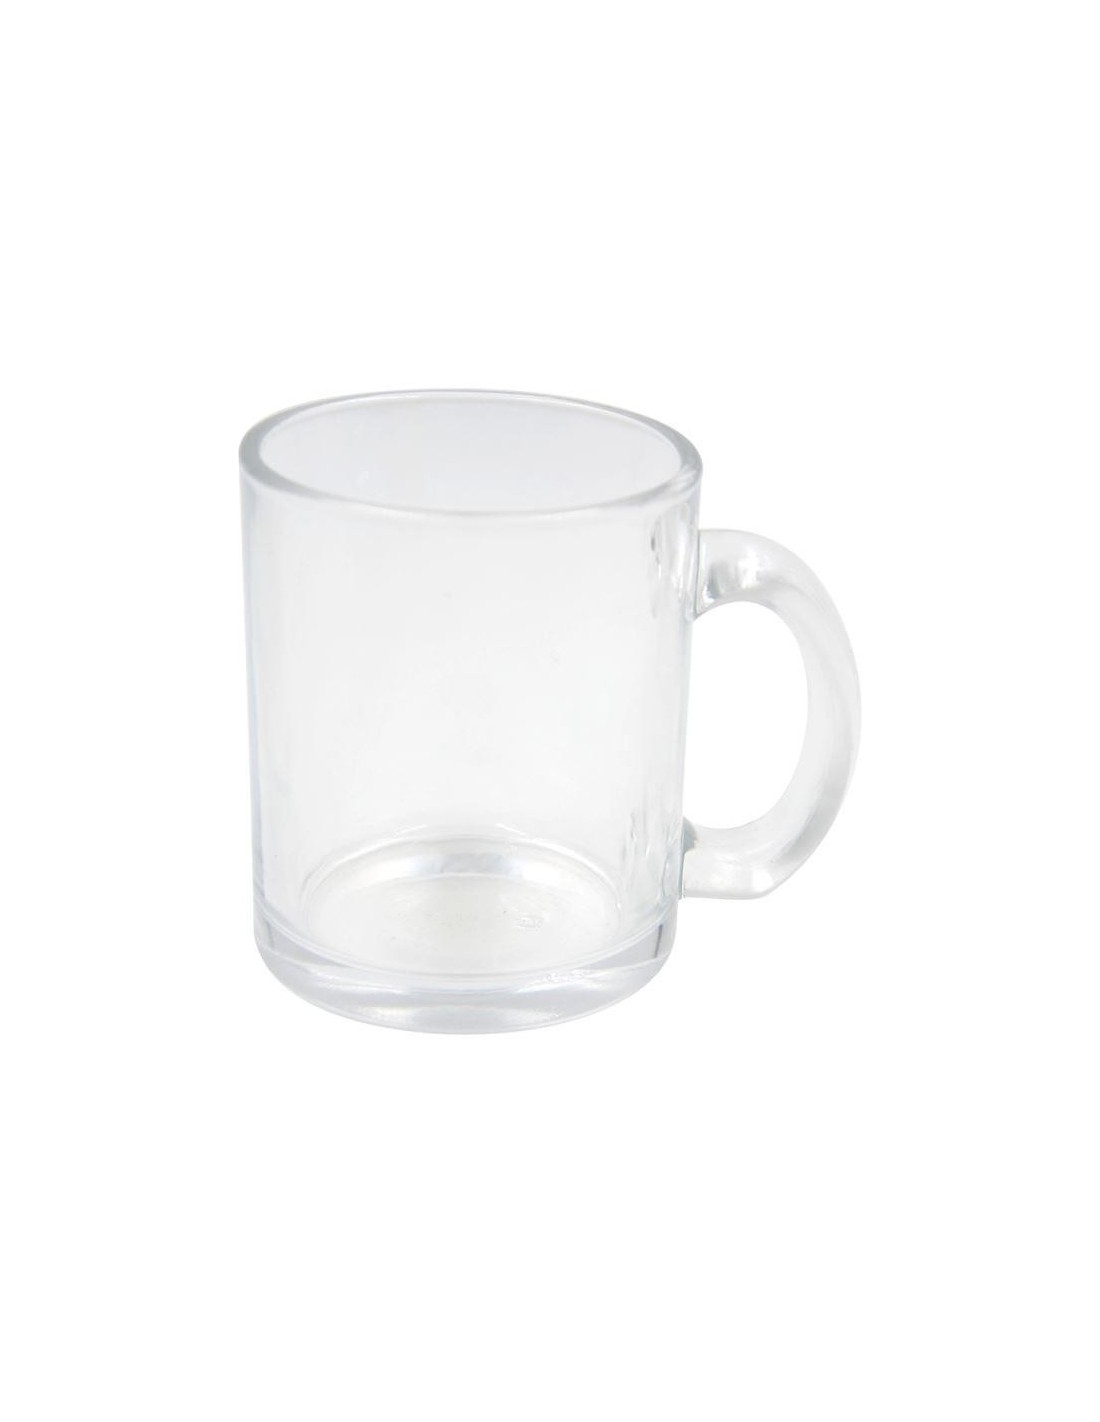 LIFKOME Taza de café de vidrio transparente, tazas de bebidas calientes,  10.1 fl oz, taza de vidrio …Ver más LIFKOME Taza de café de vidrio